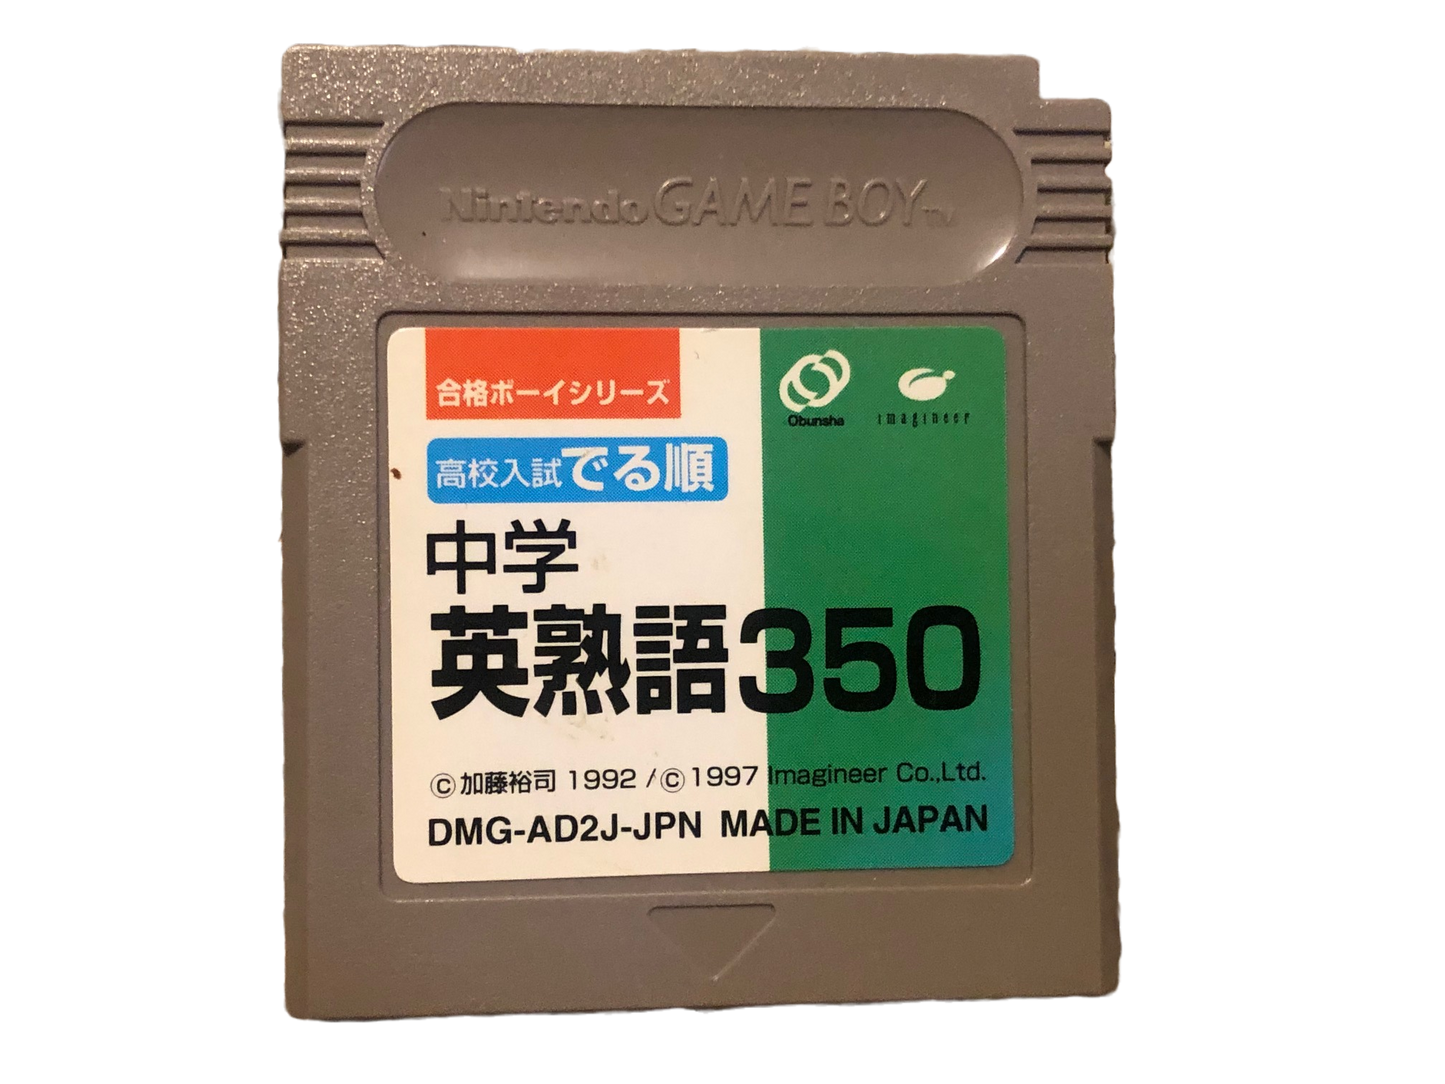 Koukou Nyuushi Derujun Chuugaku Eijukugo 350 Japanese Nintendo Game Boy Color Video Game. Authentic!